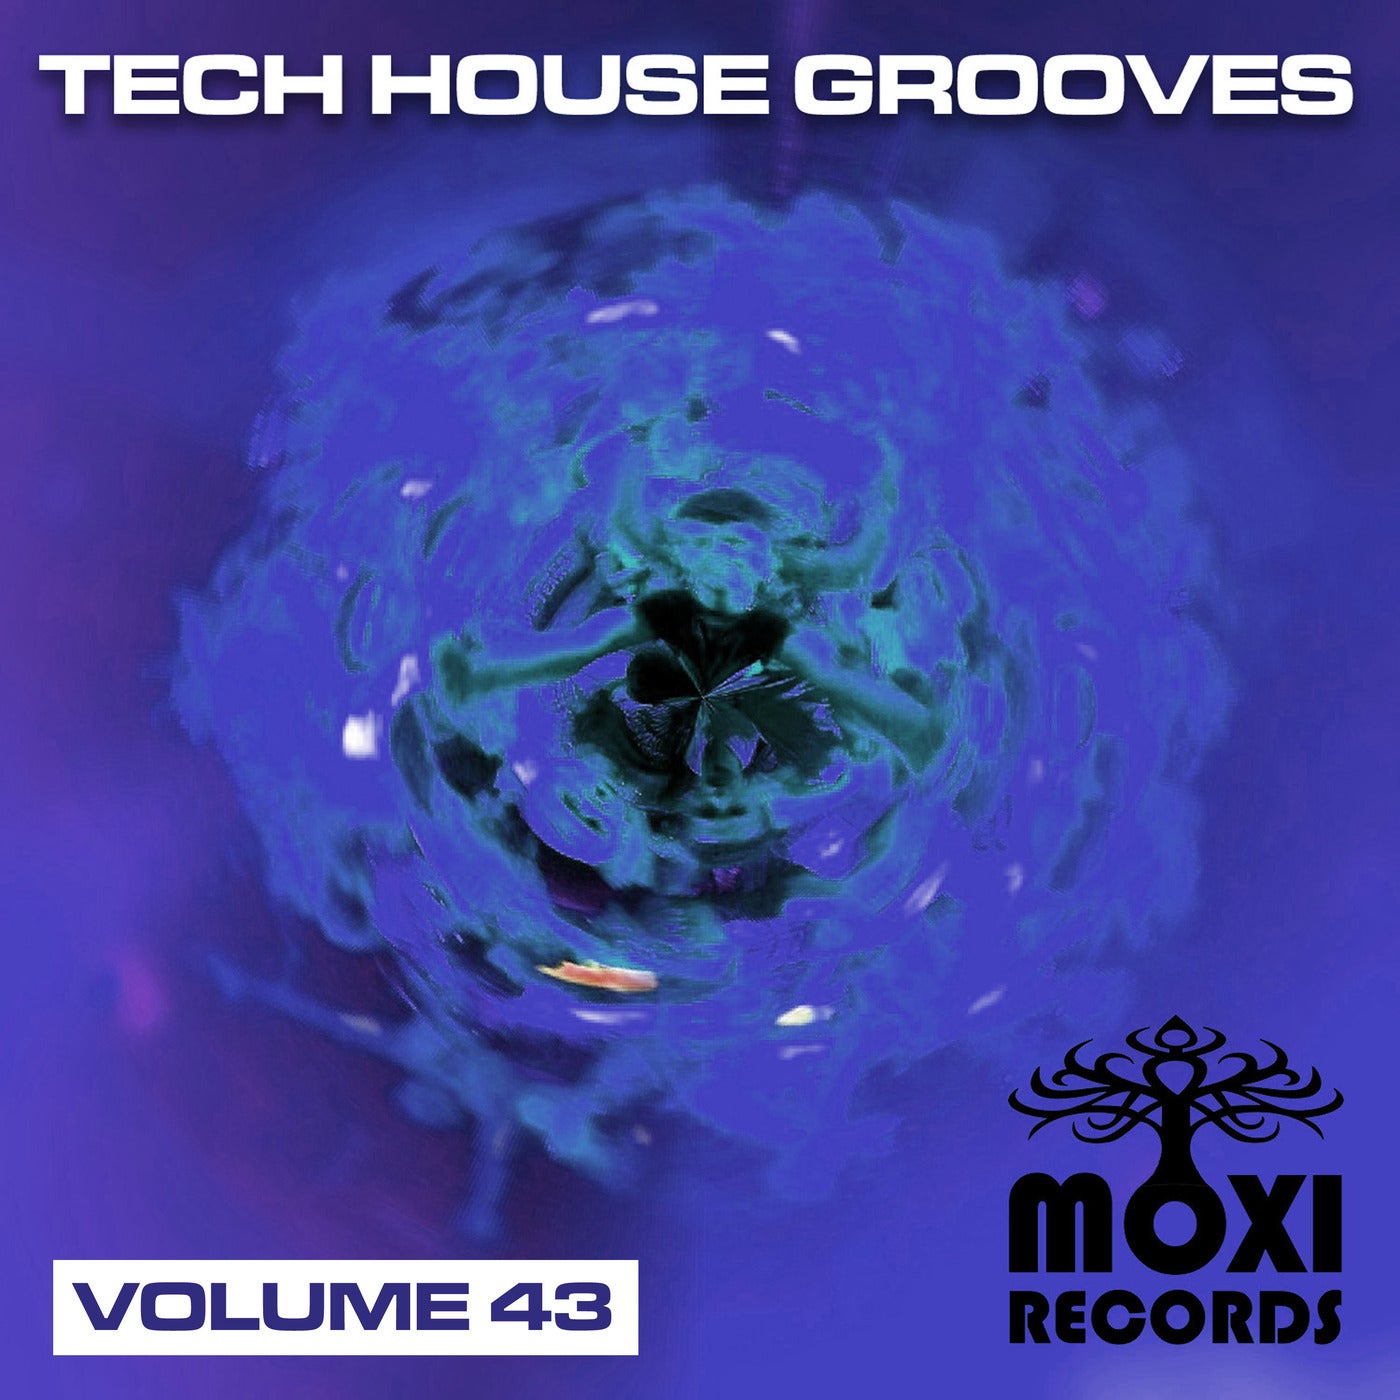 Tech House Grooves Volume 43